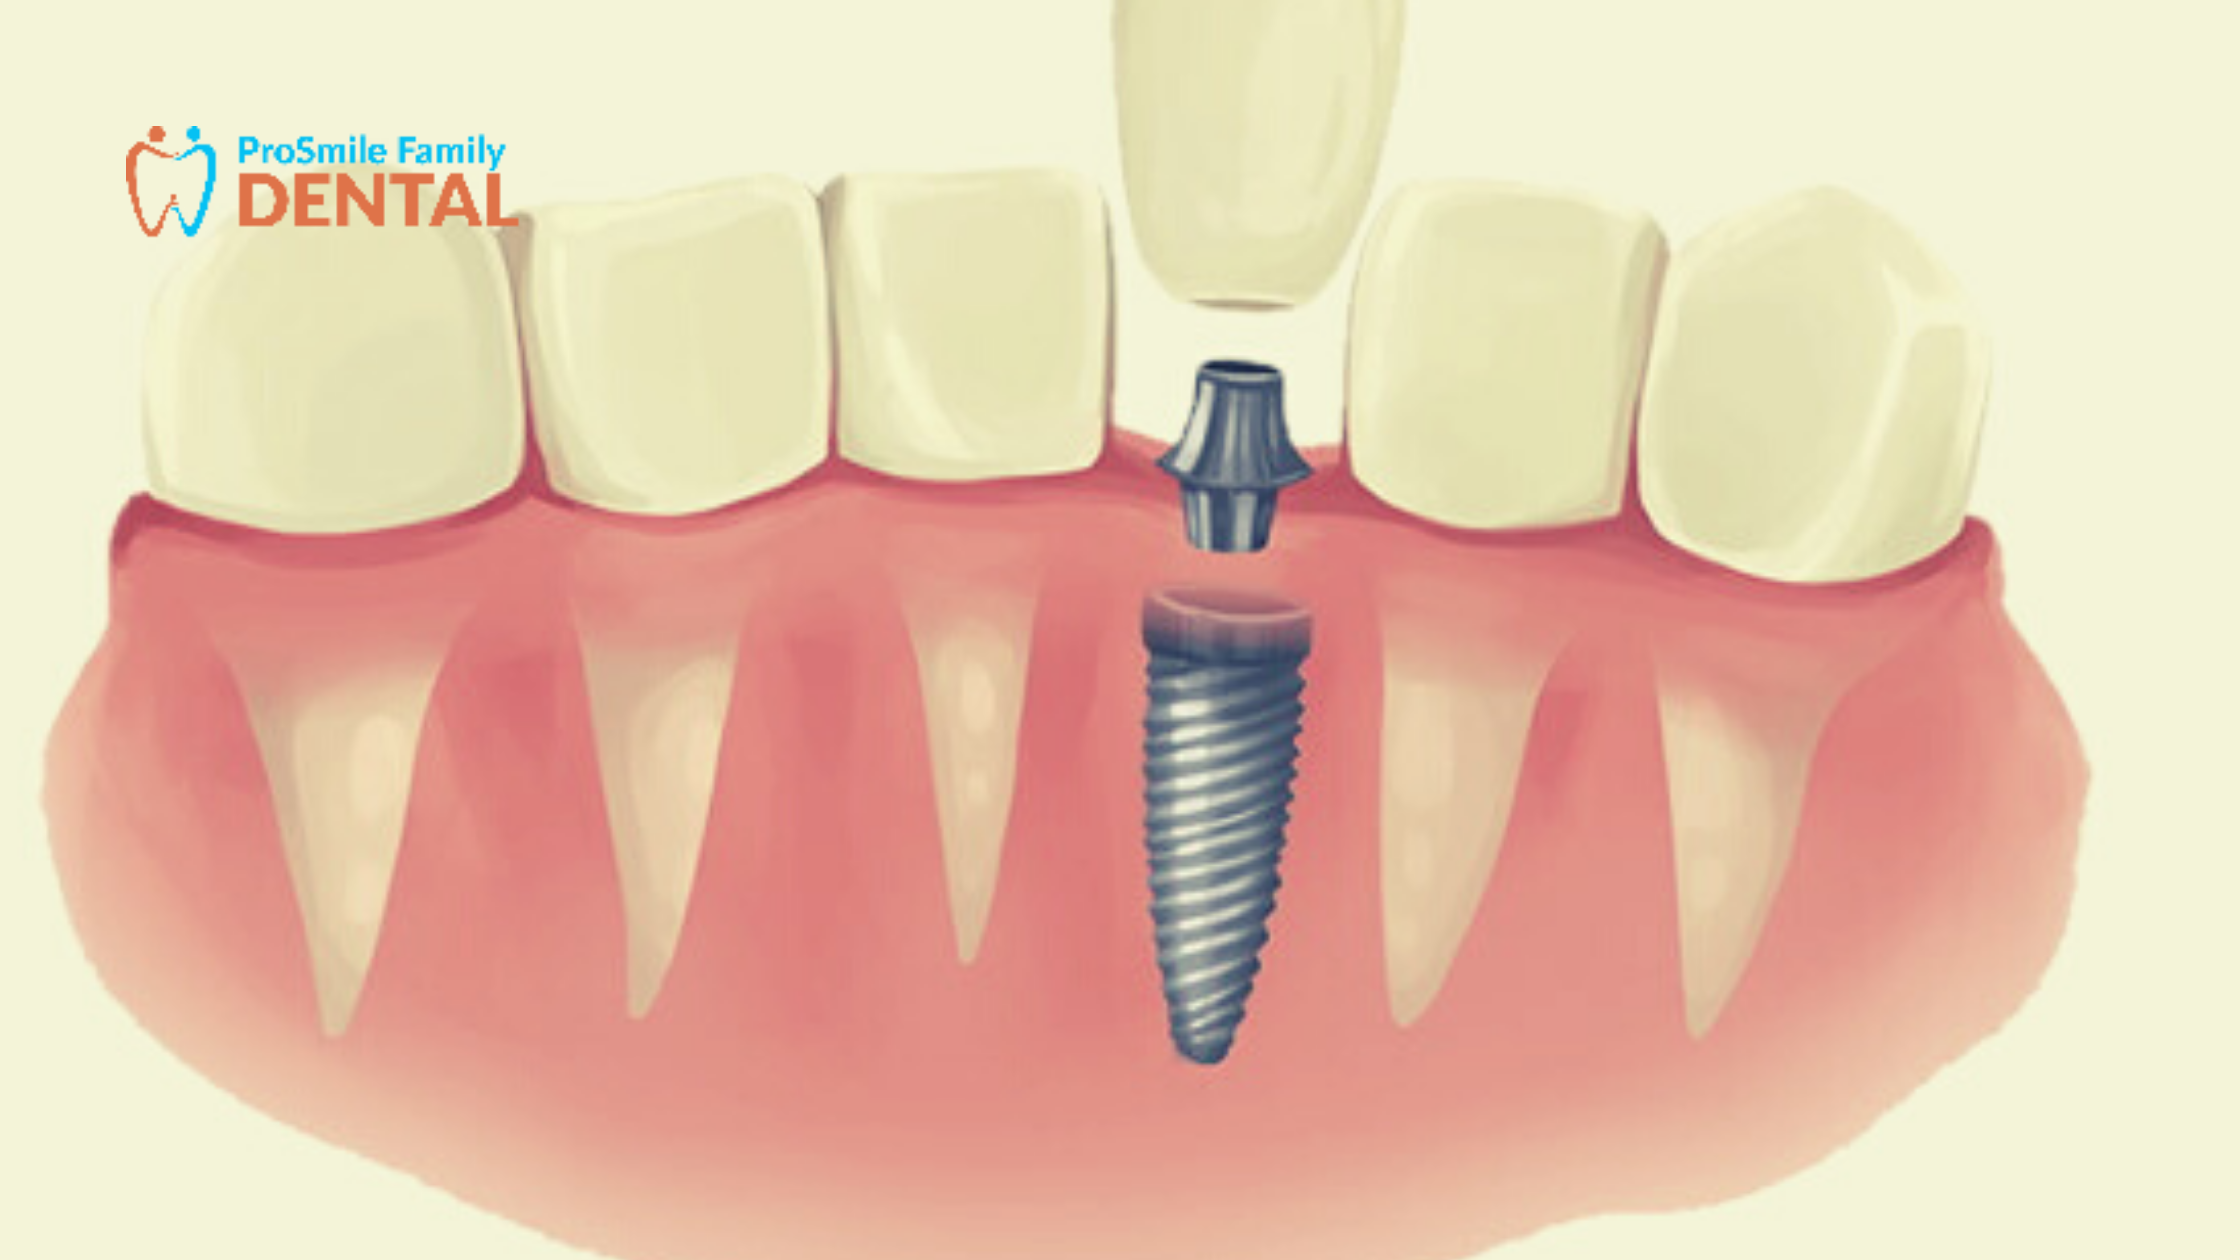 Implant Dentist Modesto